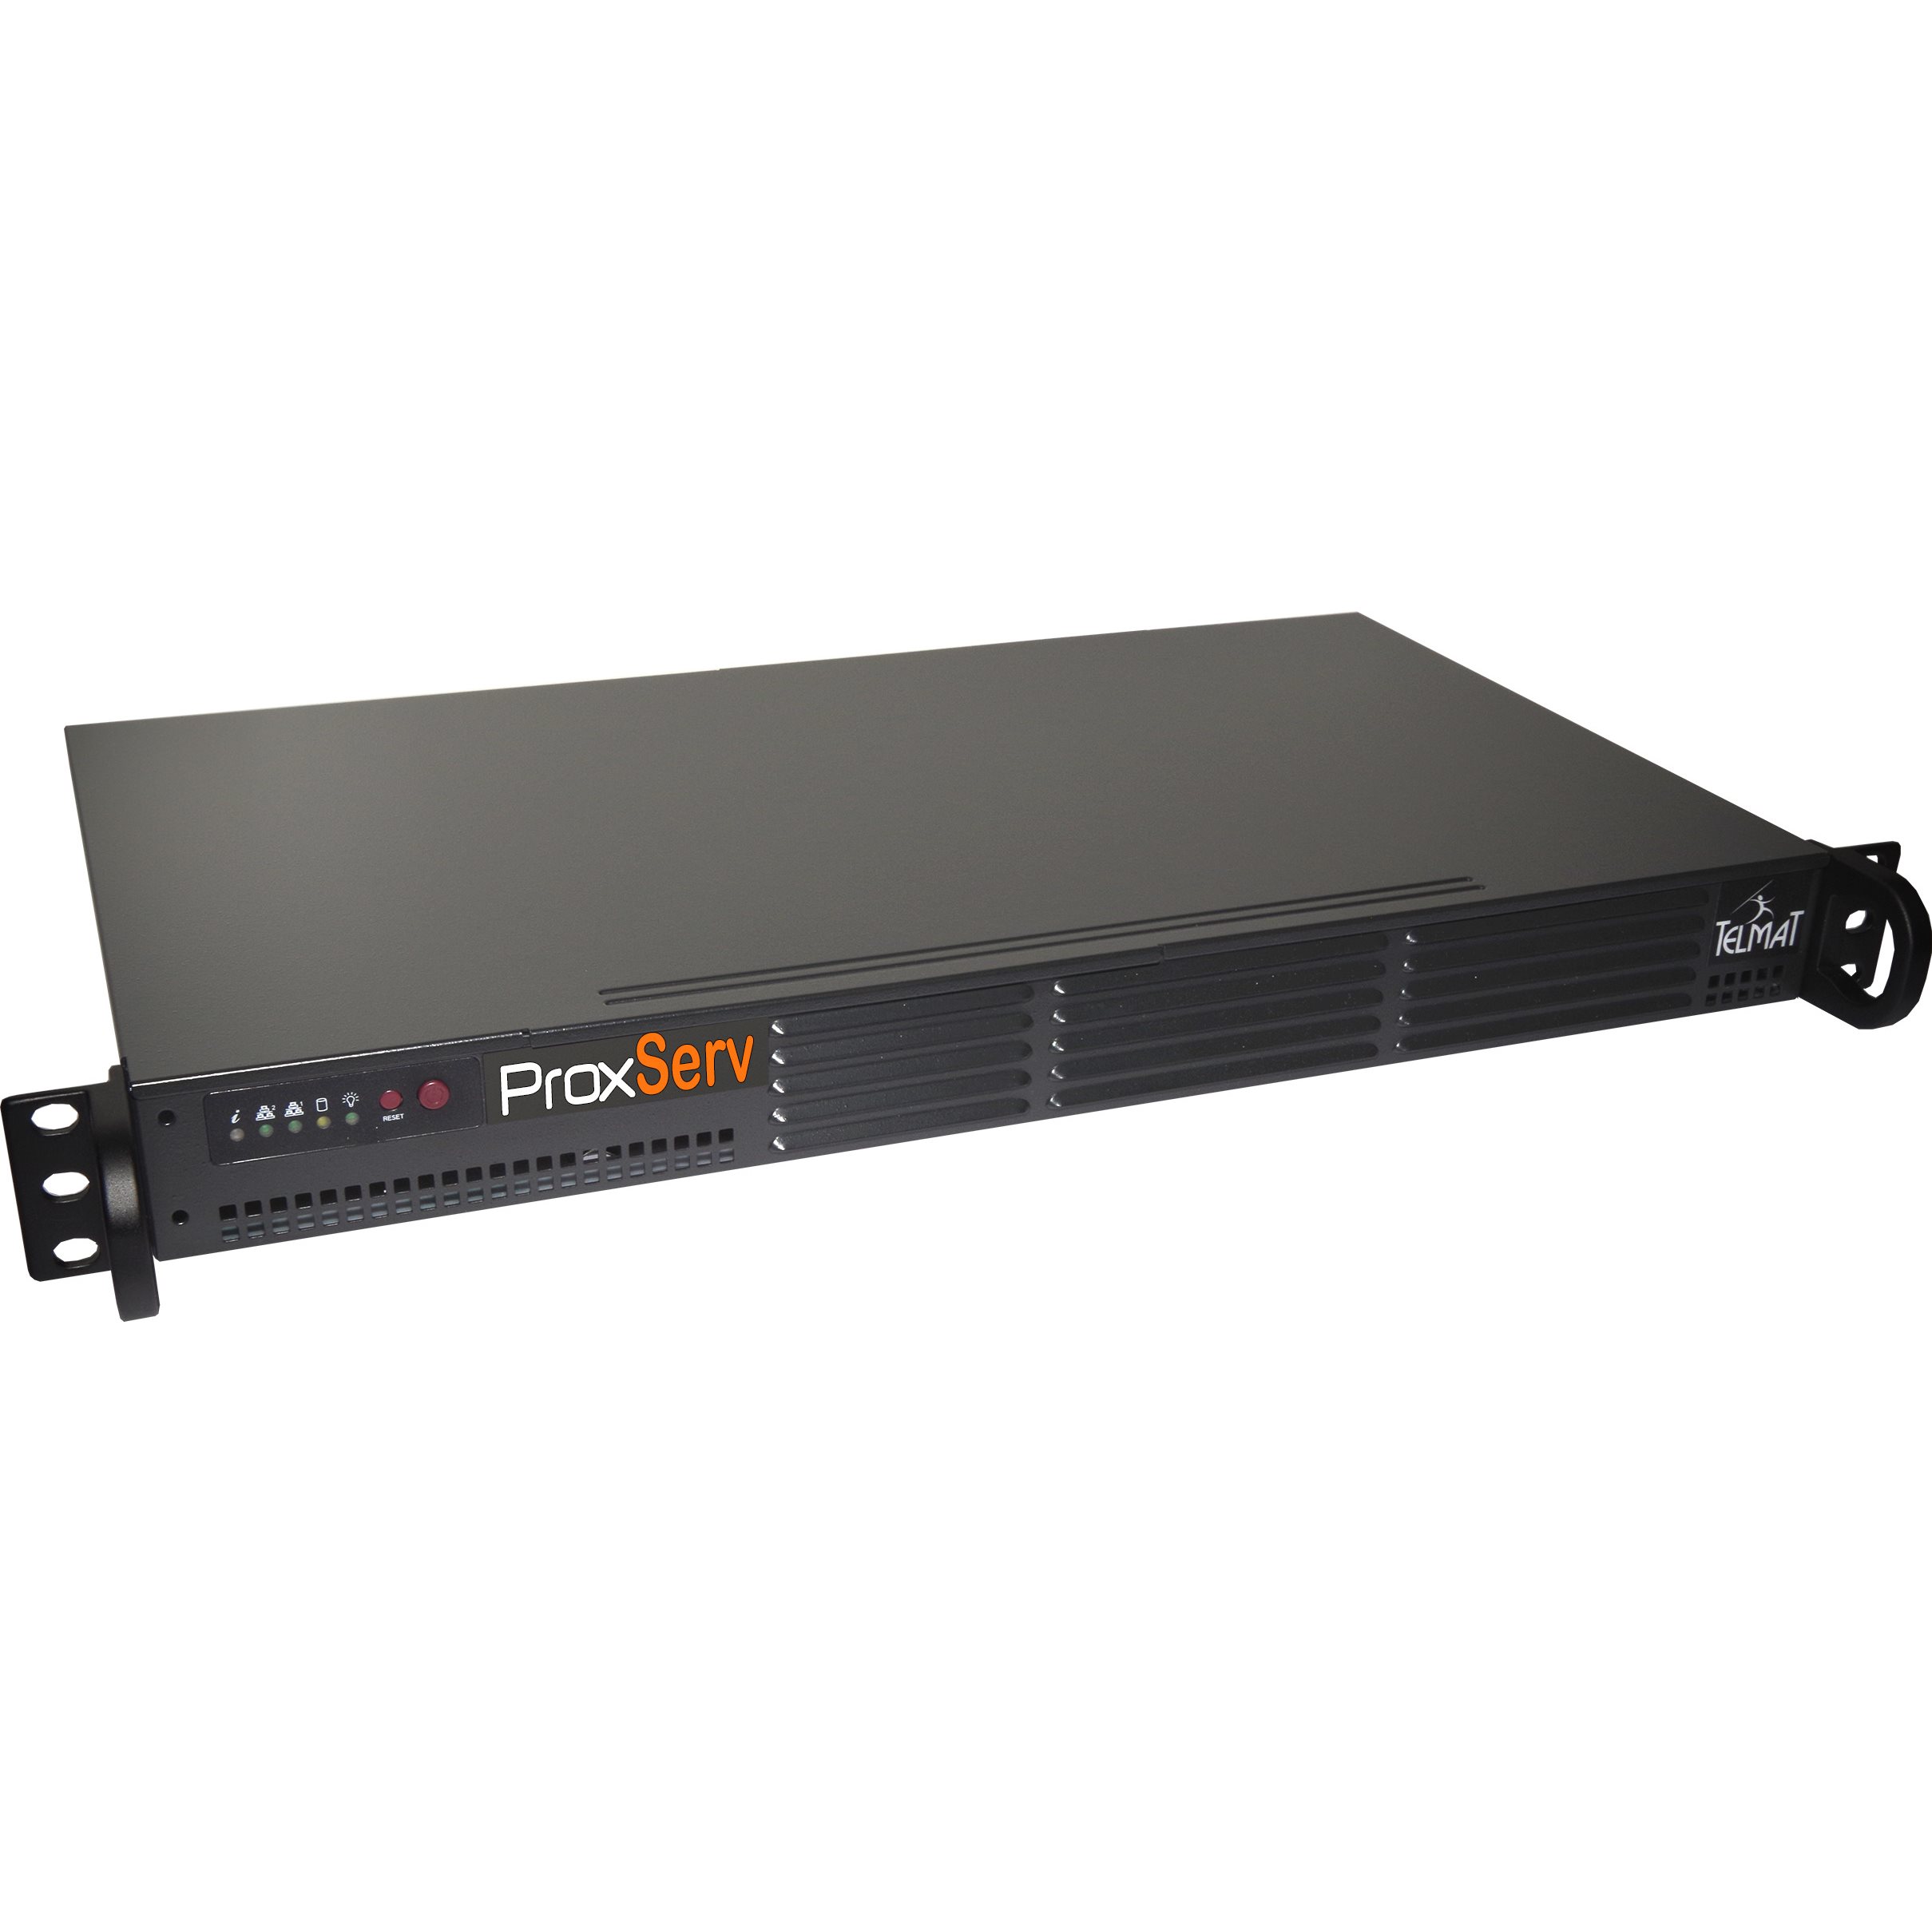   Controleur HotSpot Trace Lgale   ProxServ 250 mdias, rack 1U 3 Ethernet Giga PSV0250RCK